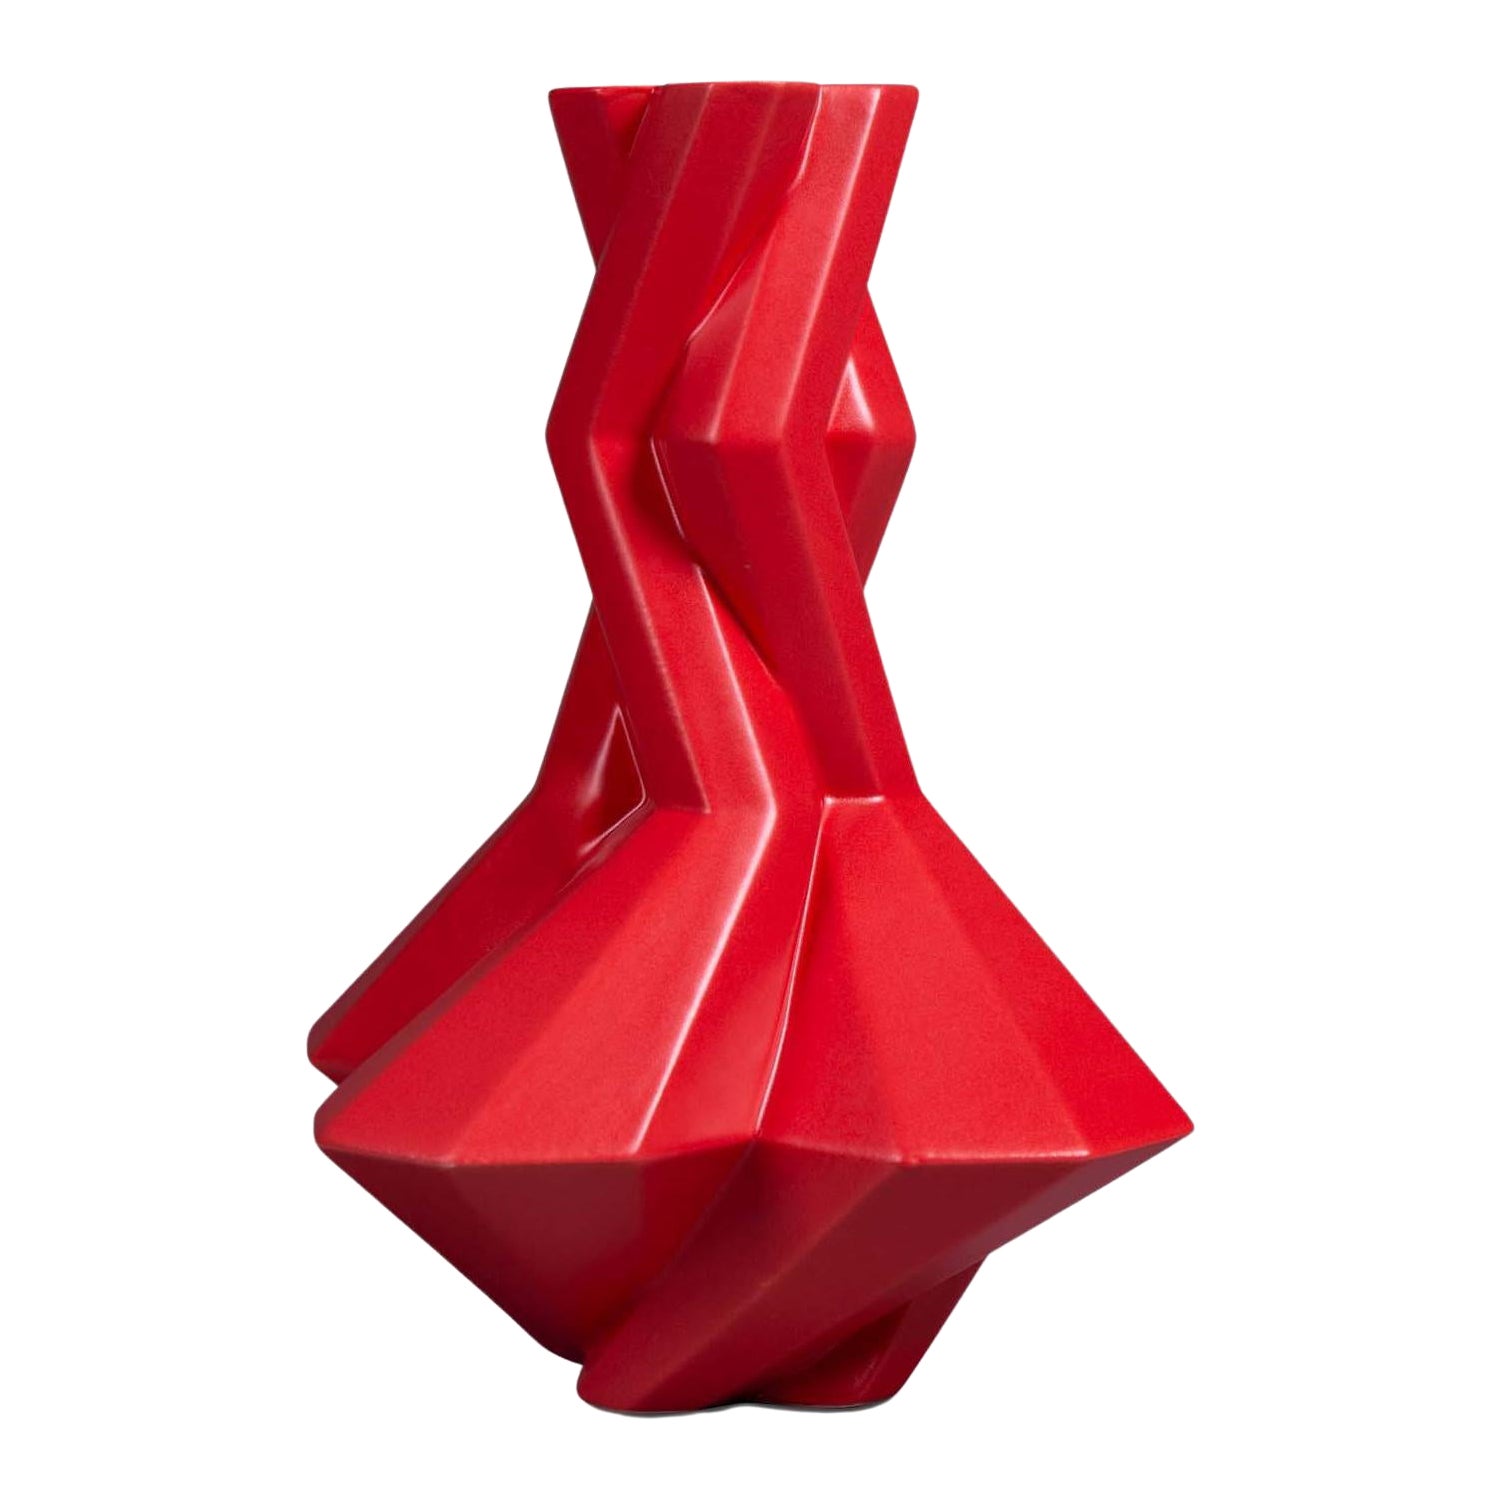 Fortress Cupola Vase Red Ceramic Contemporary Geometric by Lara Bohinc, in Stock